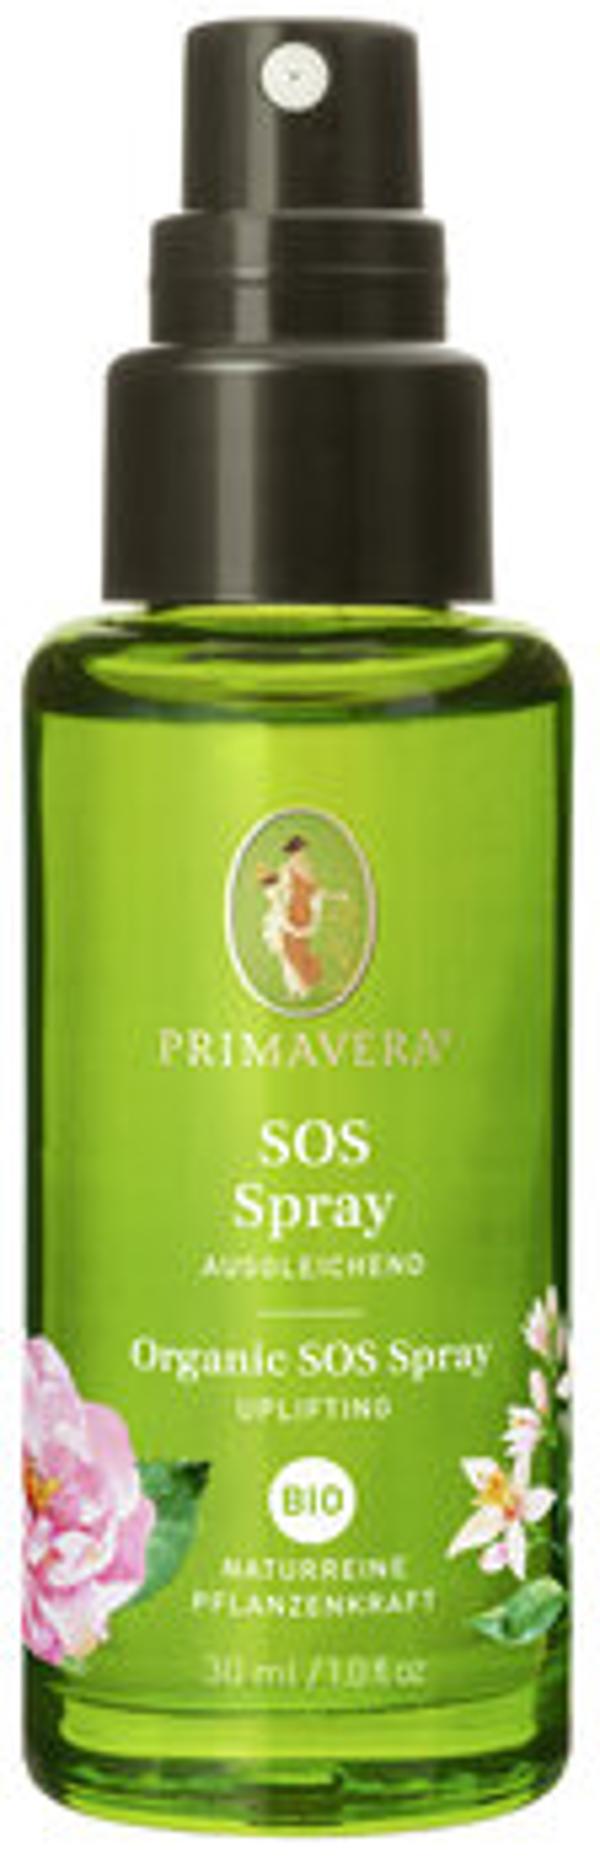 Produktfoto zu SOS Spray